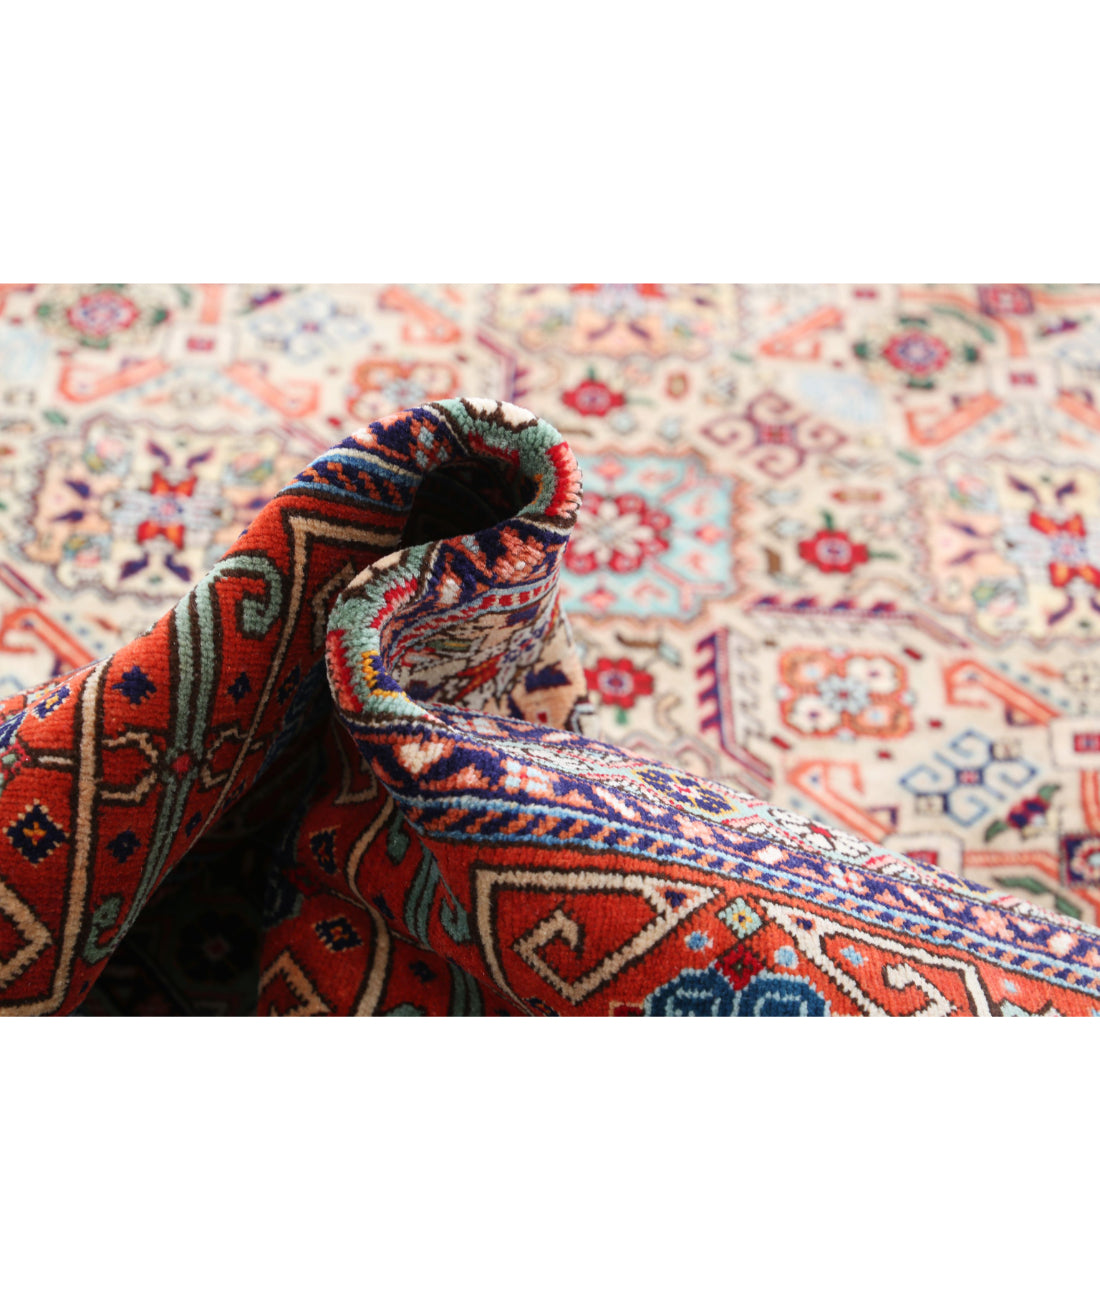 Hand Knotted Persian Tabriz Wool Rug - 9'8'' x 11'10'' 9'8'' x 11'10'' (290 X 355) / Beige / Rust